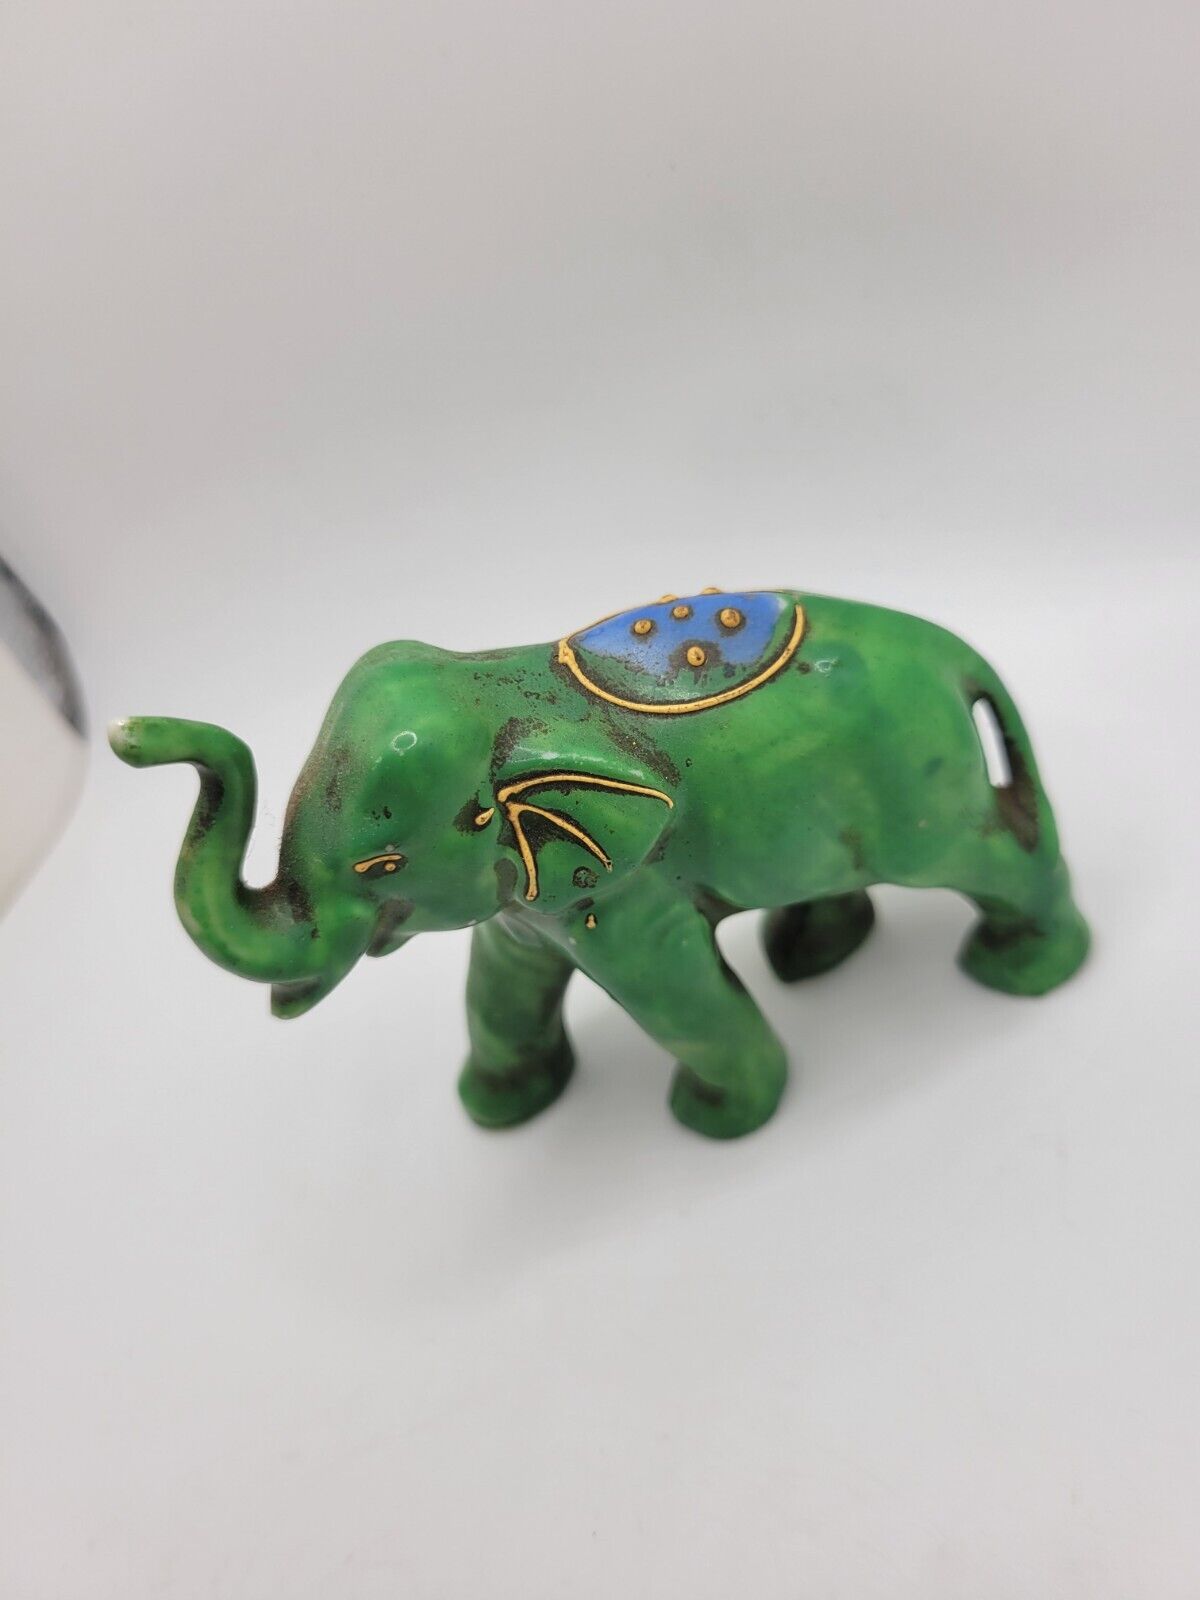 Antique Elephant Figurine Japan Porcelain Green Indian Elephant From Japan